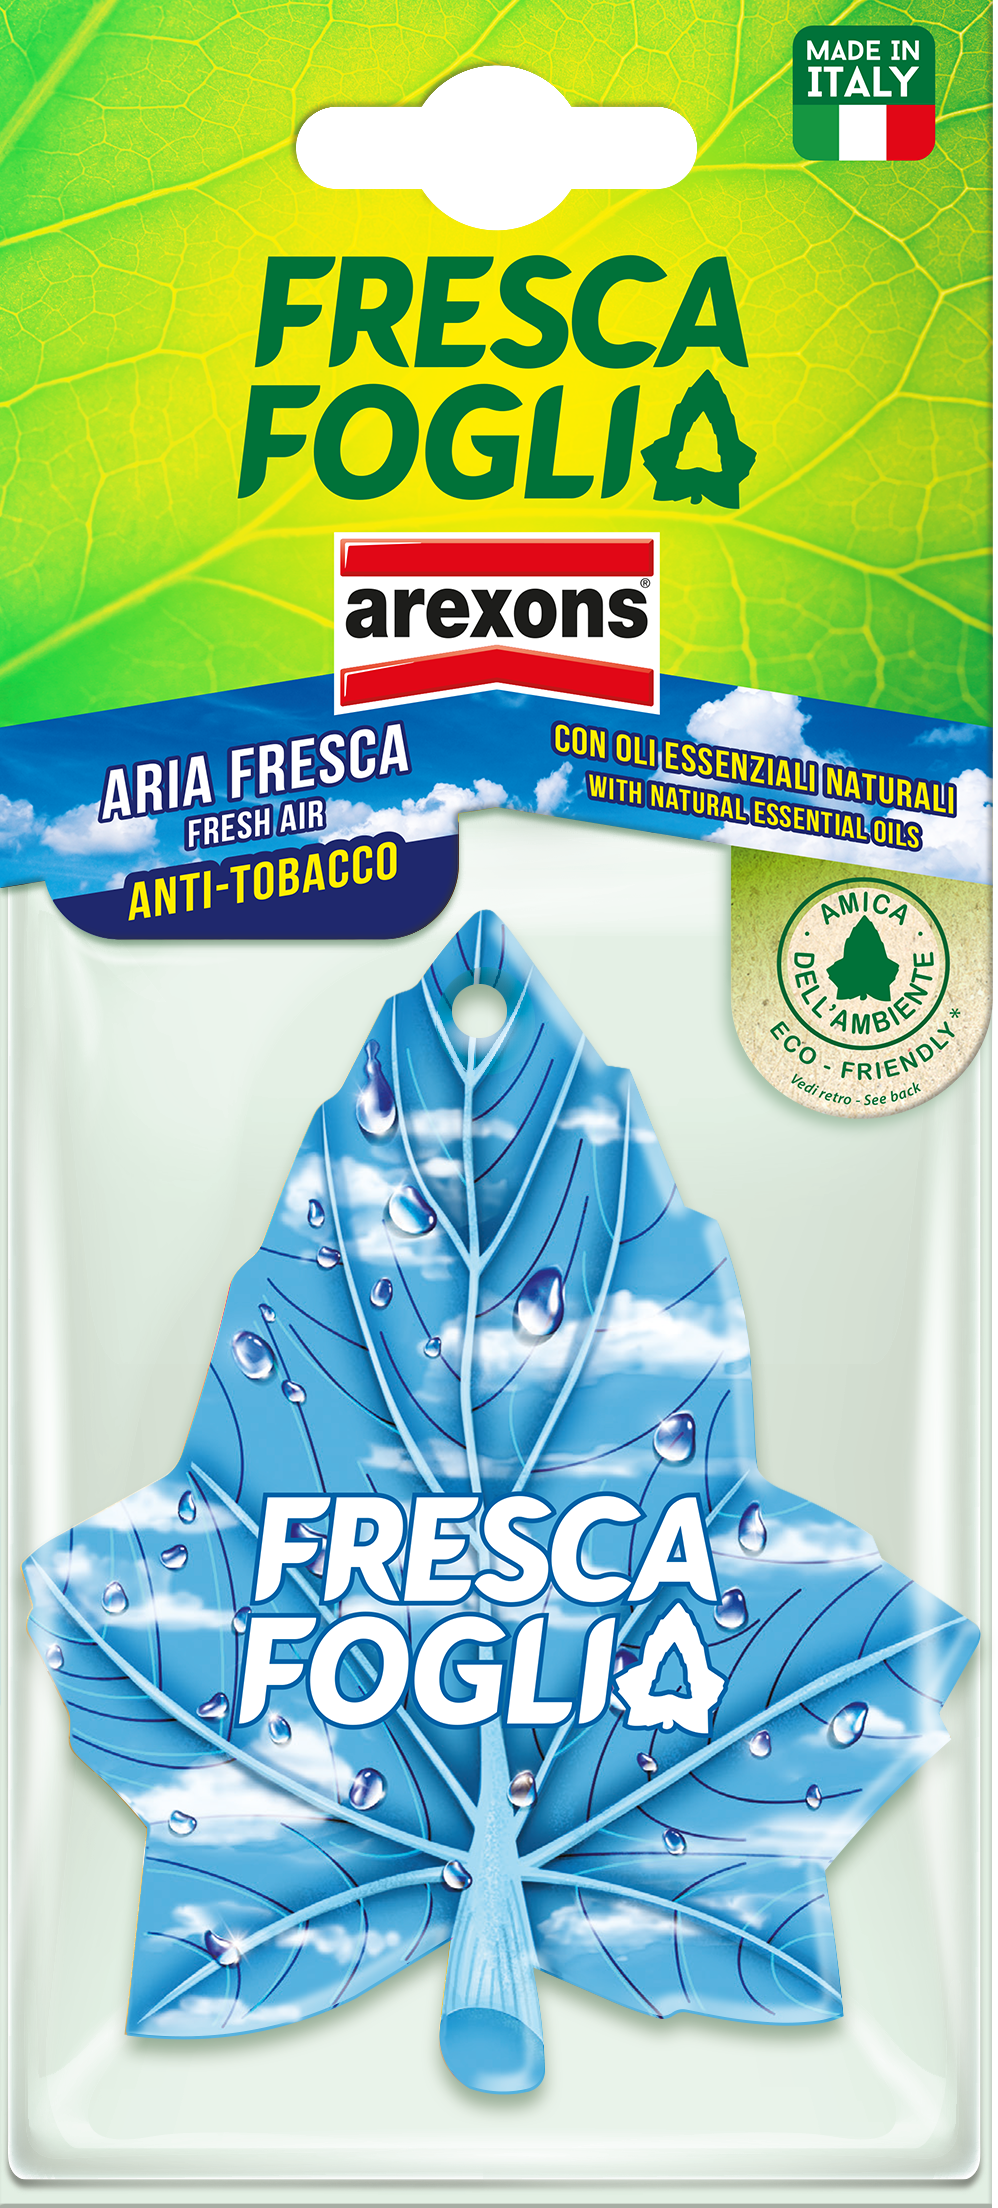 Fresca Foglia - Air frais